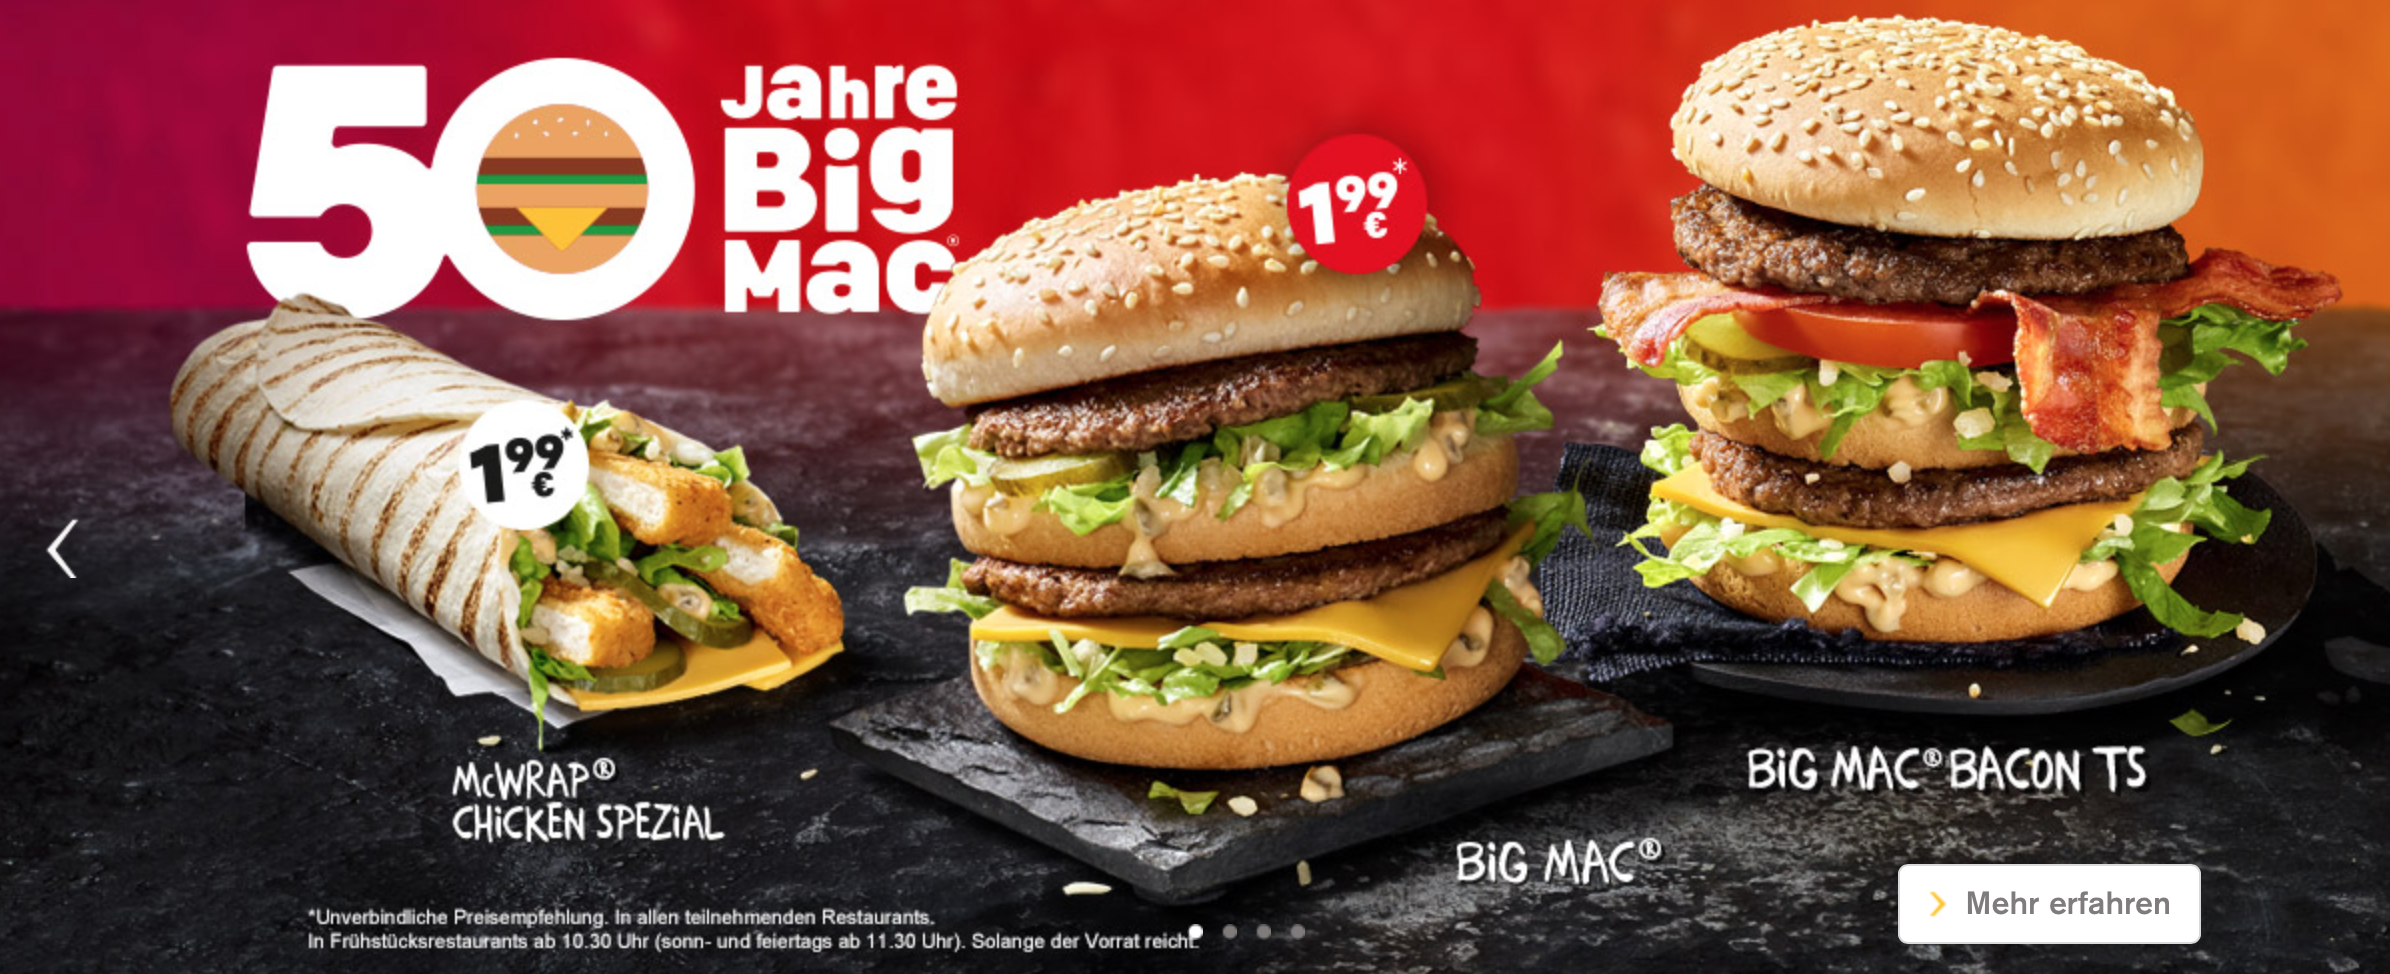 50 years of the Big Mac